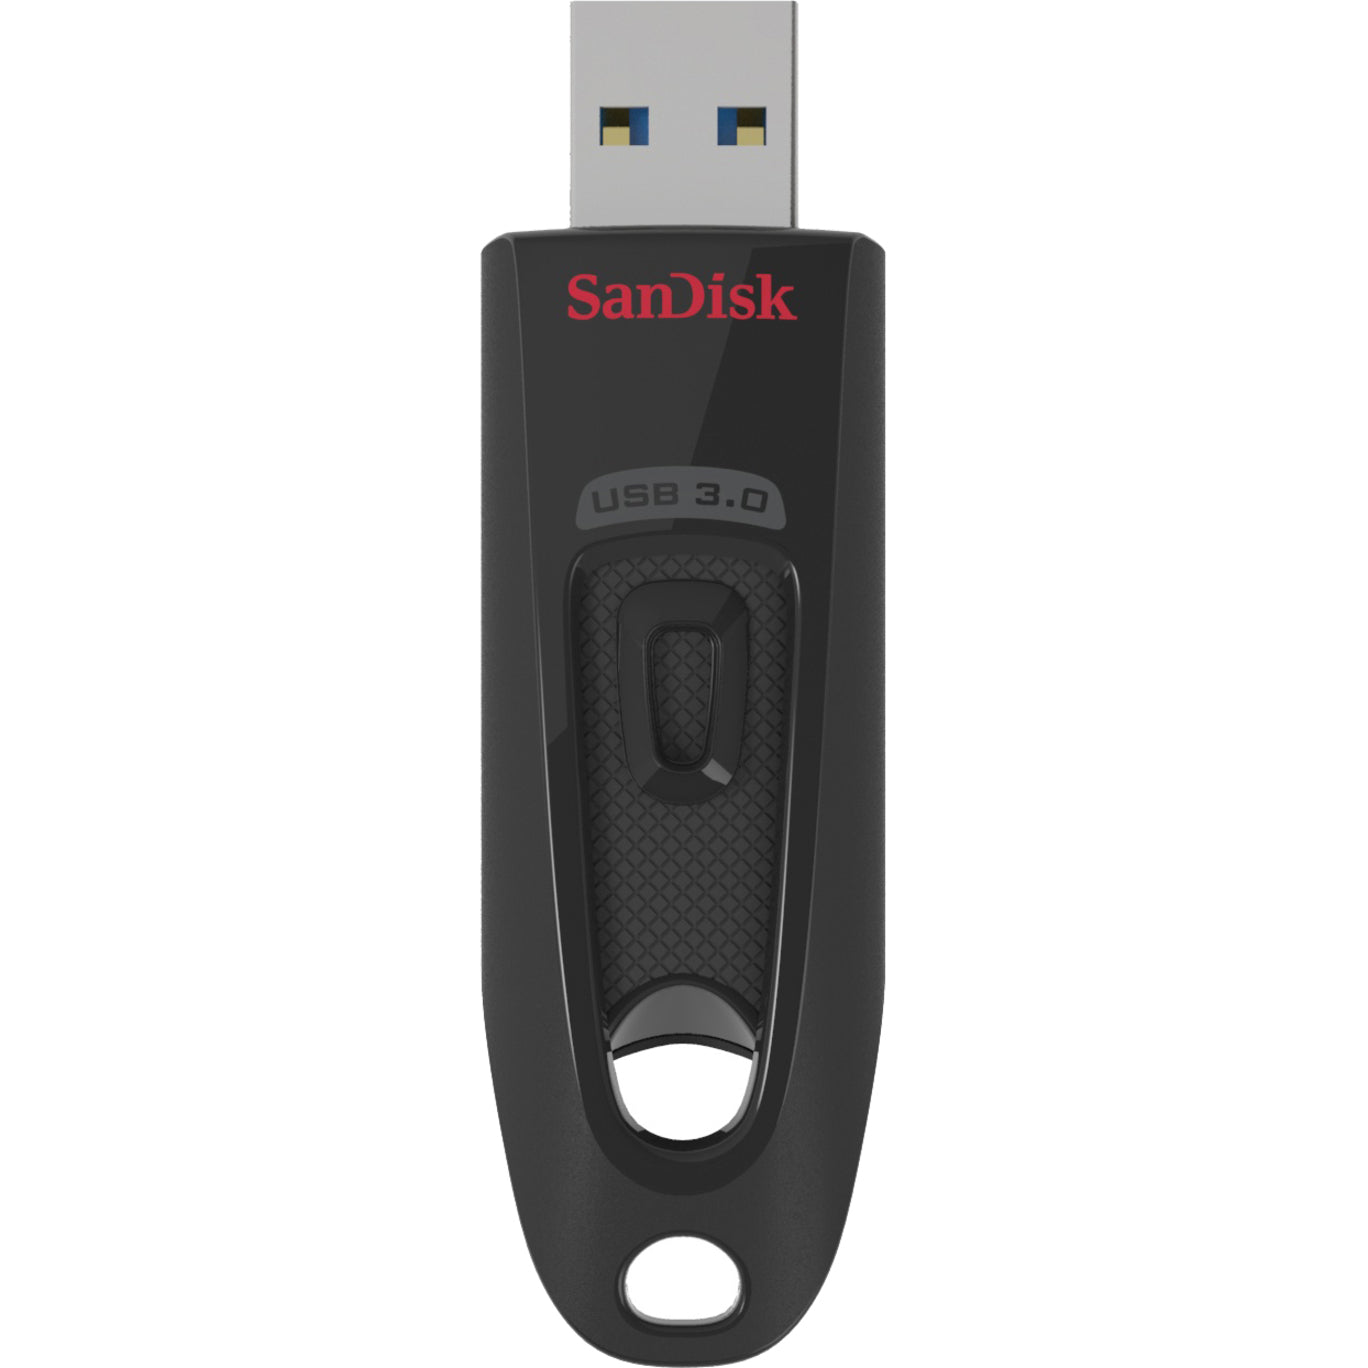 SanDisk SDCZ48-064G-A46 Ultra USB 3.0 Flash Drive, 64GB Storage, 80MB/s Read Speed